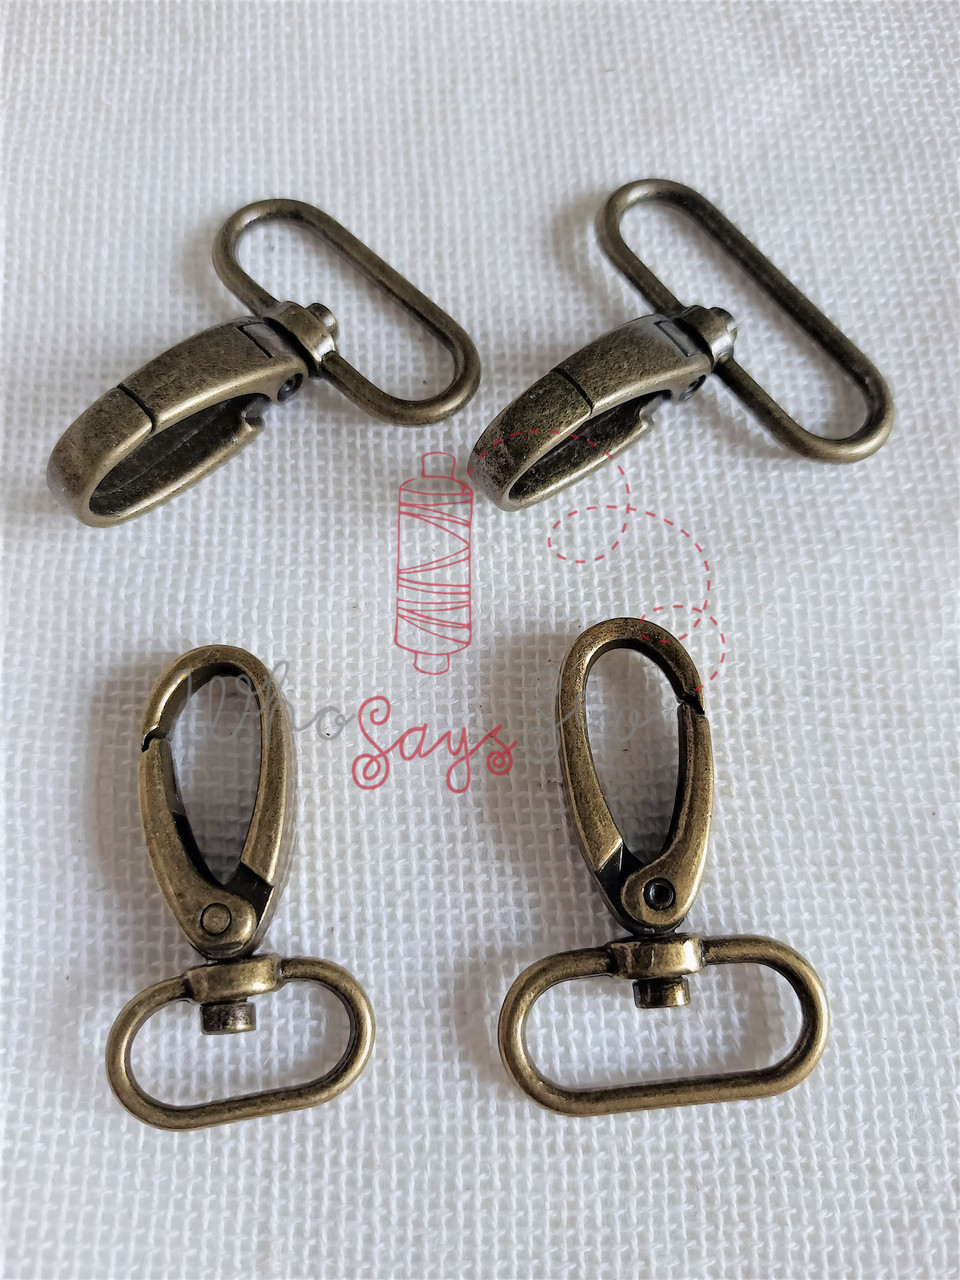 2x 2cm (3/4), 2.5cm (1), 3.2cm (1 1/4) or 3.8cm (1 1/2) Medium Weight  Push Gate Swivel Snap Hooks in Antique Brass. Nickel Free. - Who Says Sew